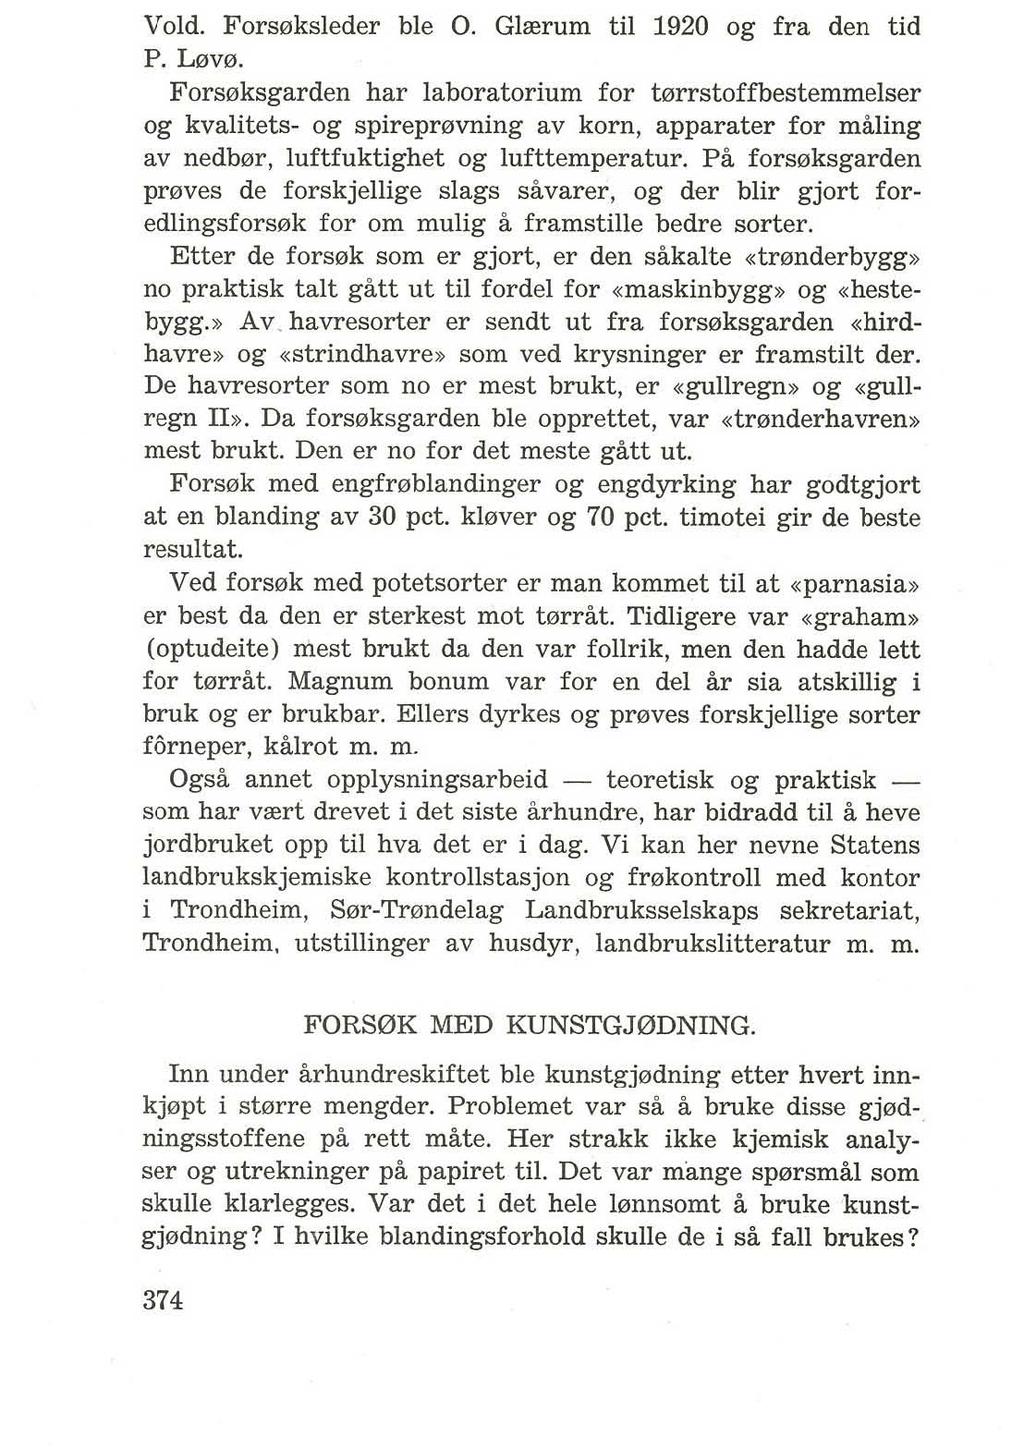 Void. Fors0ksleder ble O. Glrerum til 1920 og fra den tid P. L0V0.